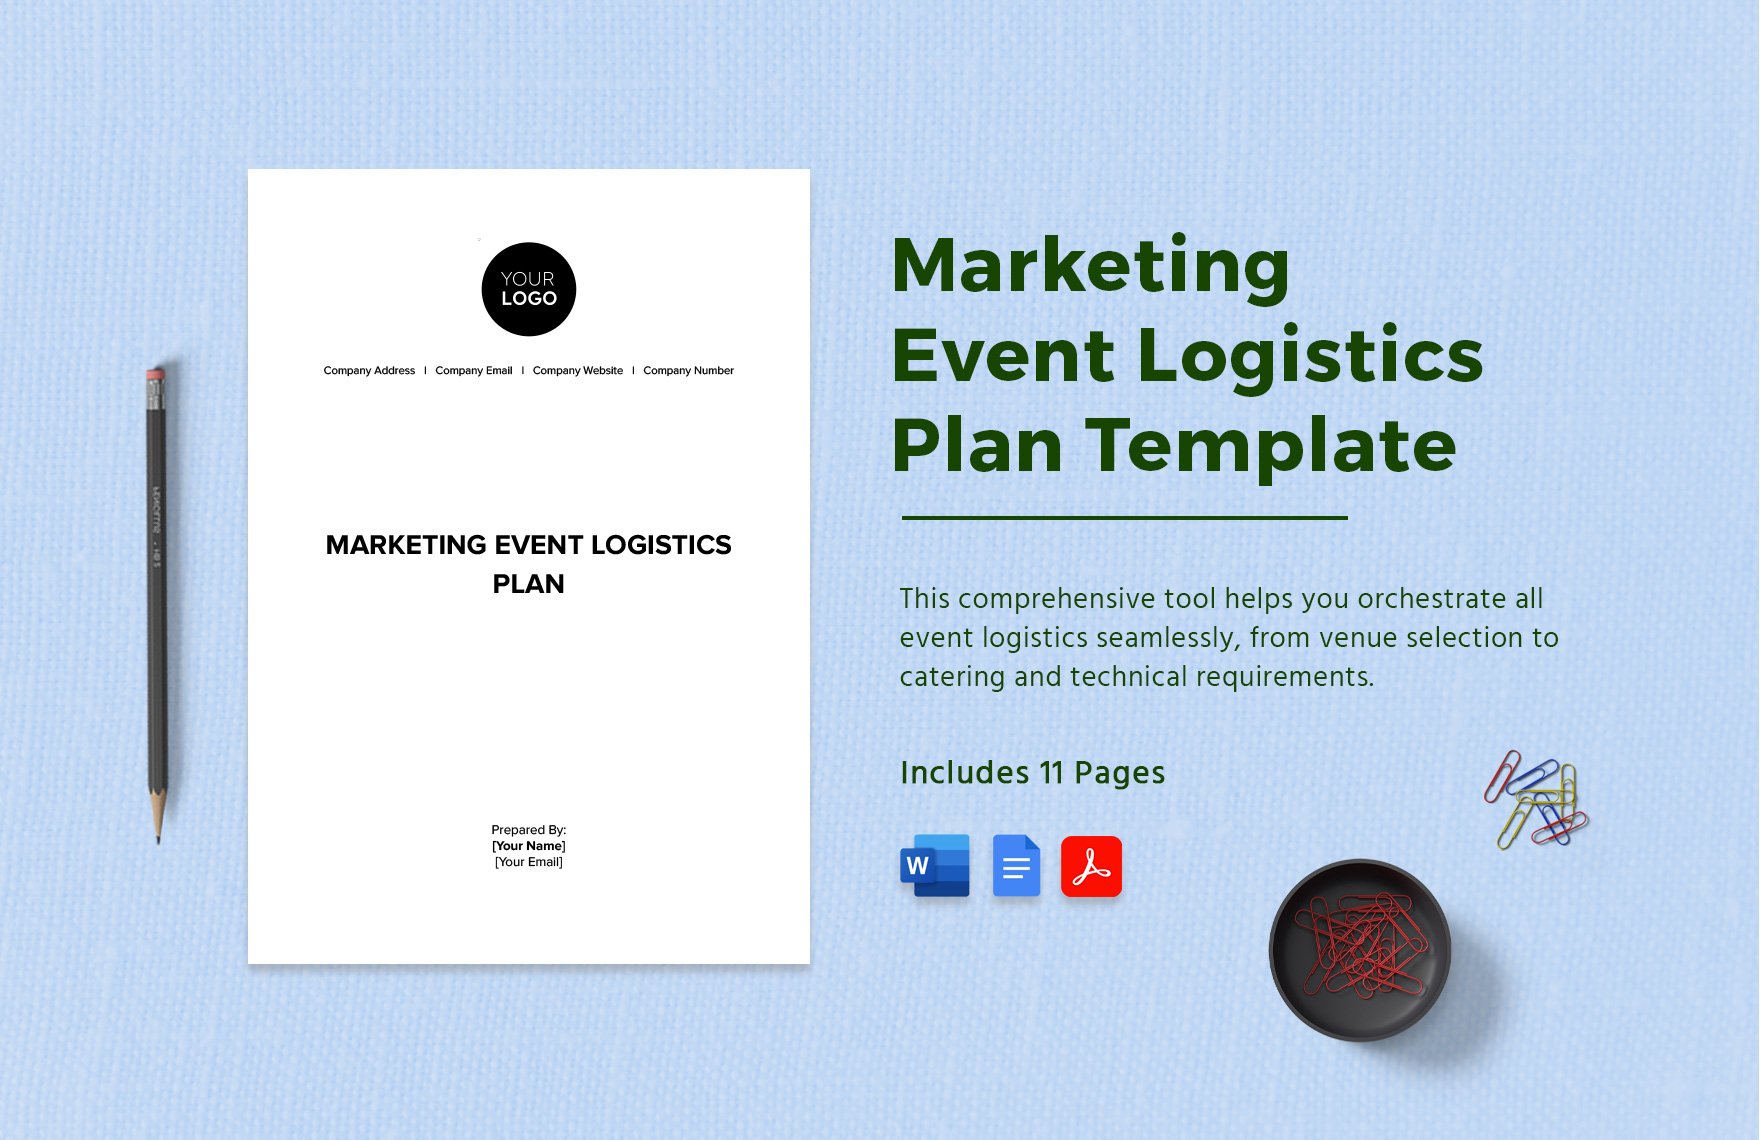 Marketing Event Logistics Plan Template in Word, Google Docs, PDF